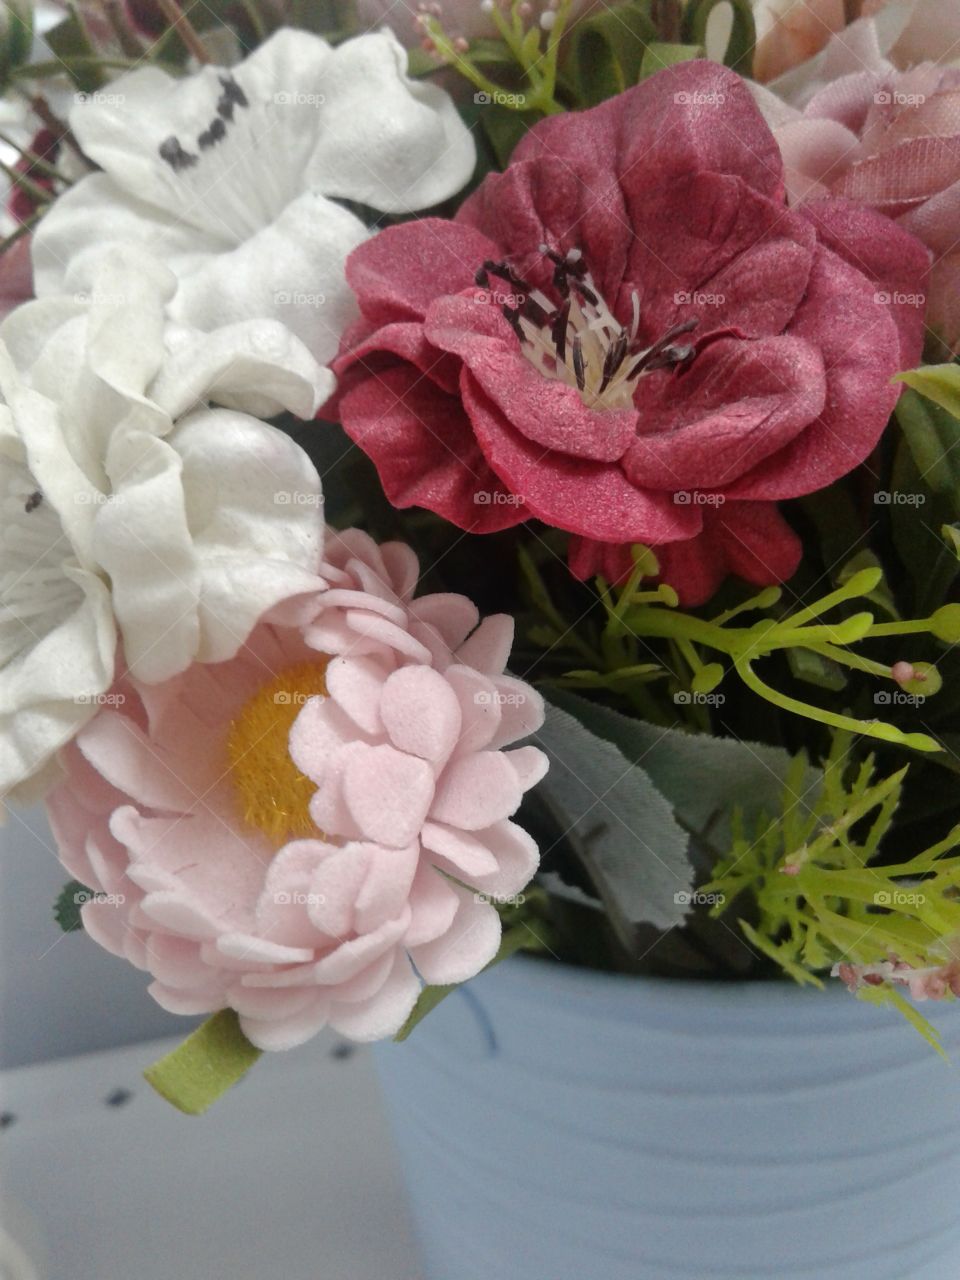 Jar of beautiful flowers